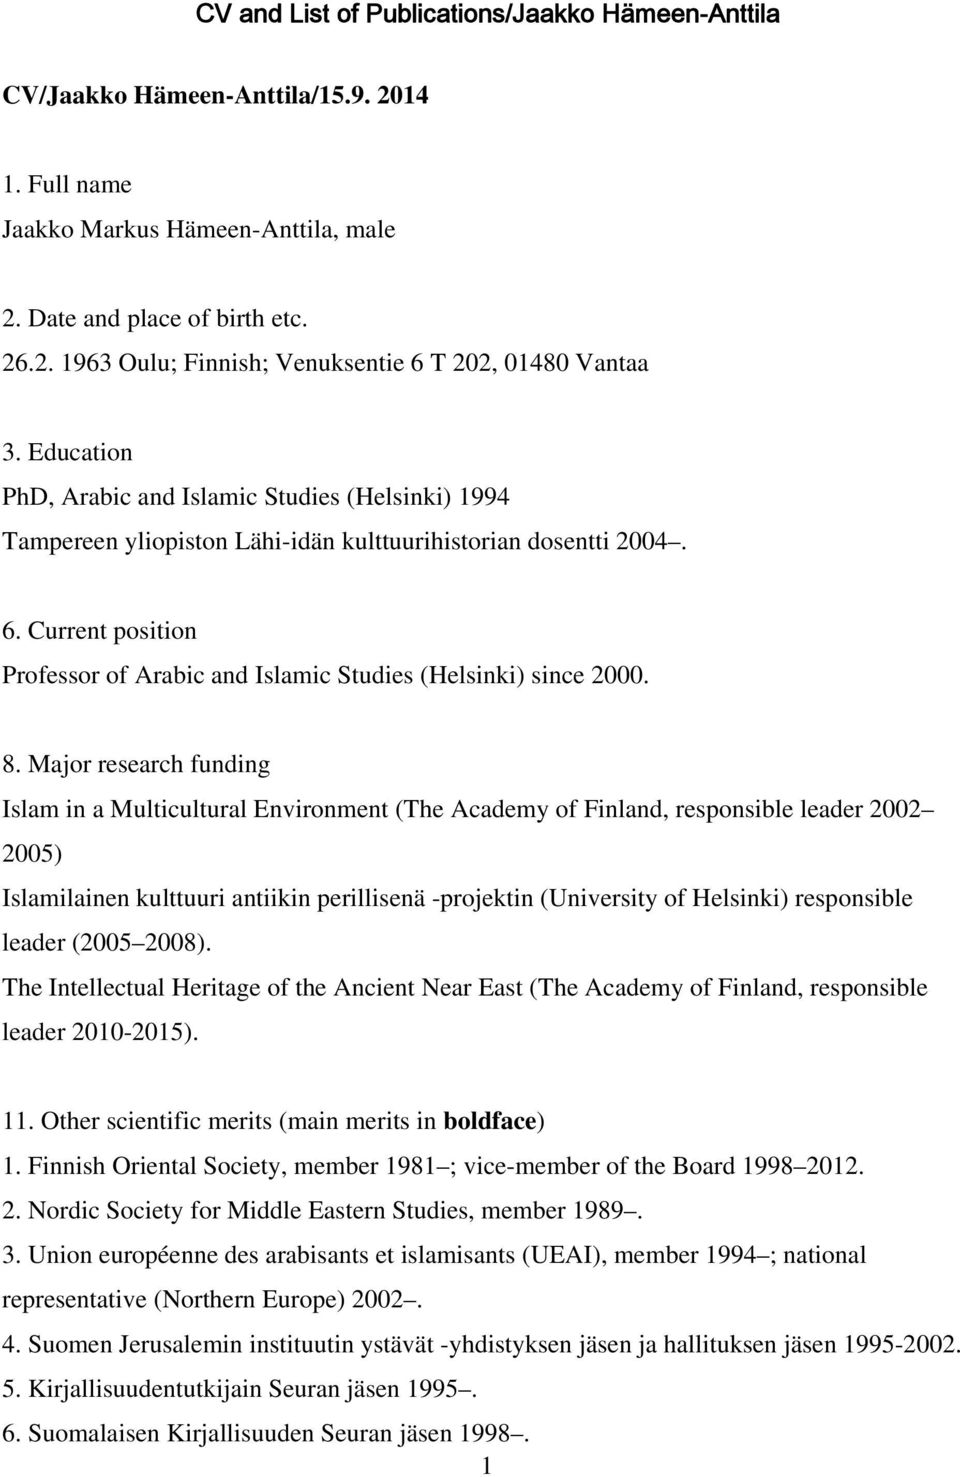 Current position Professor of Arabic and Islamic Studies (Helsinki) since 2000. 8.